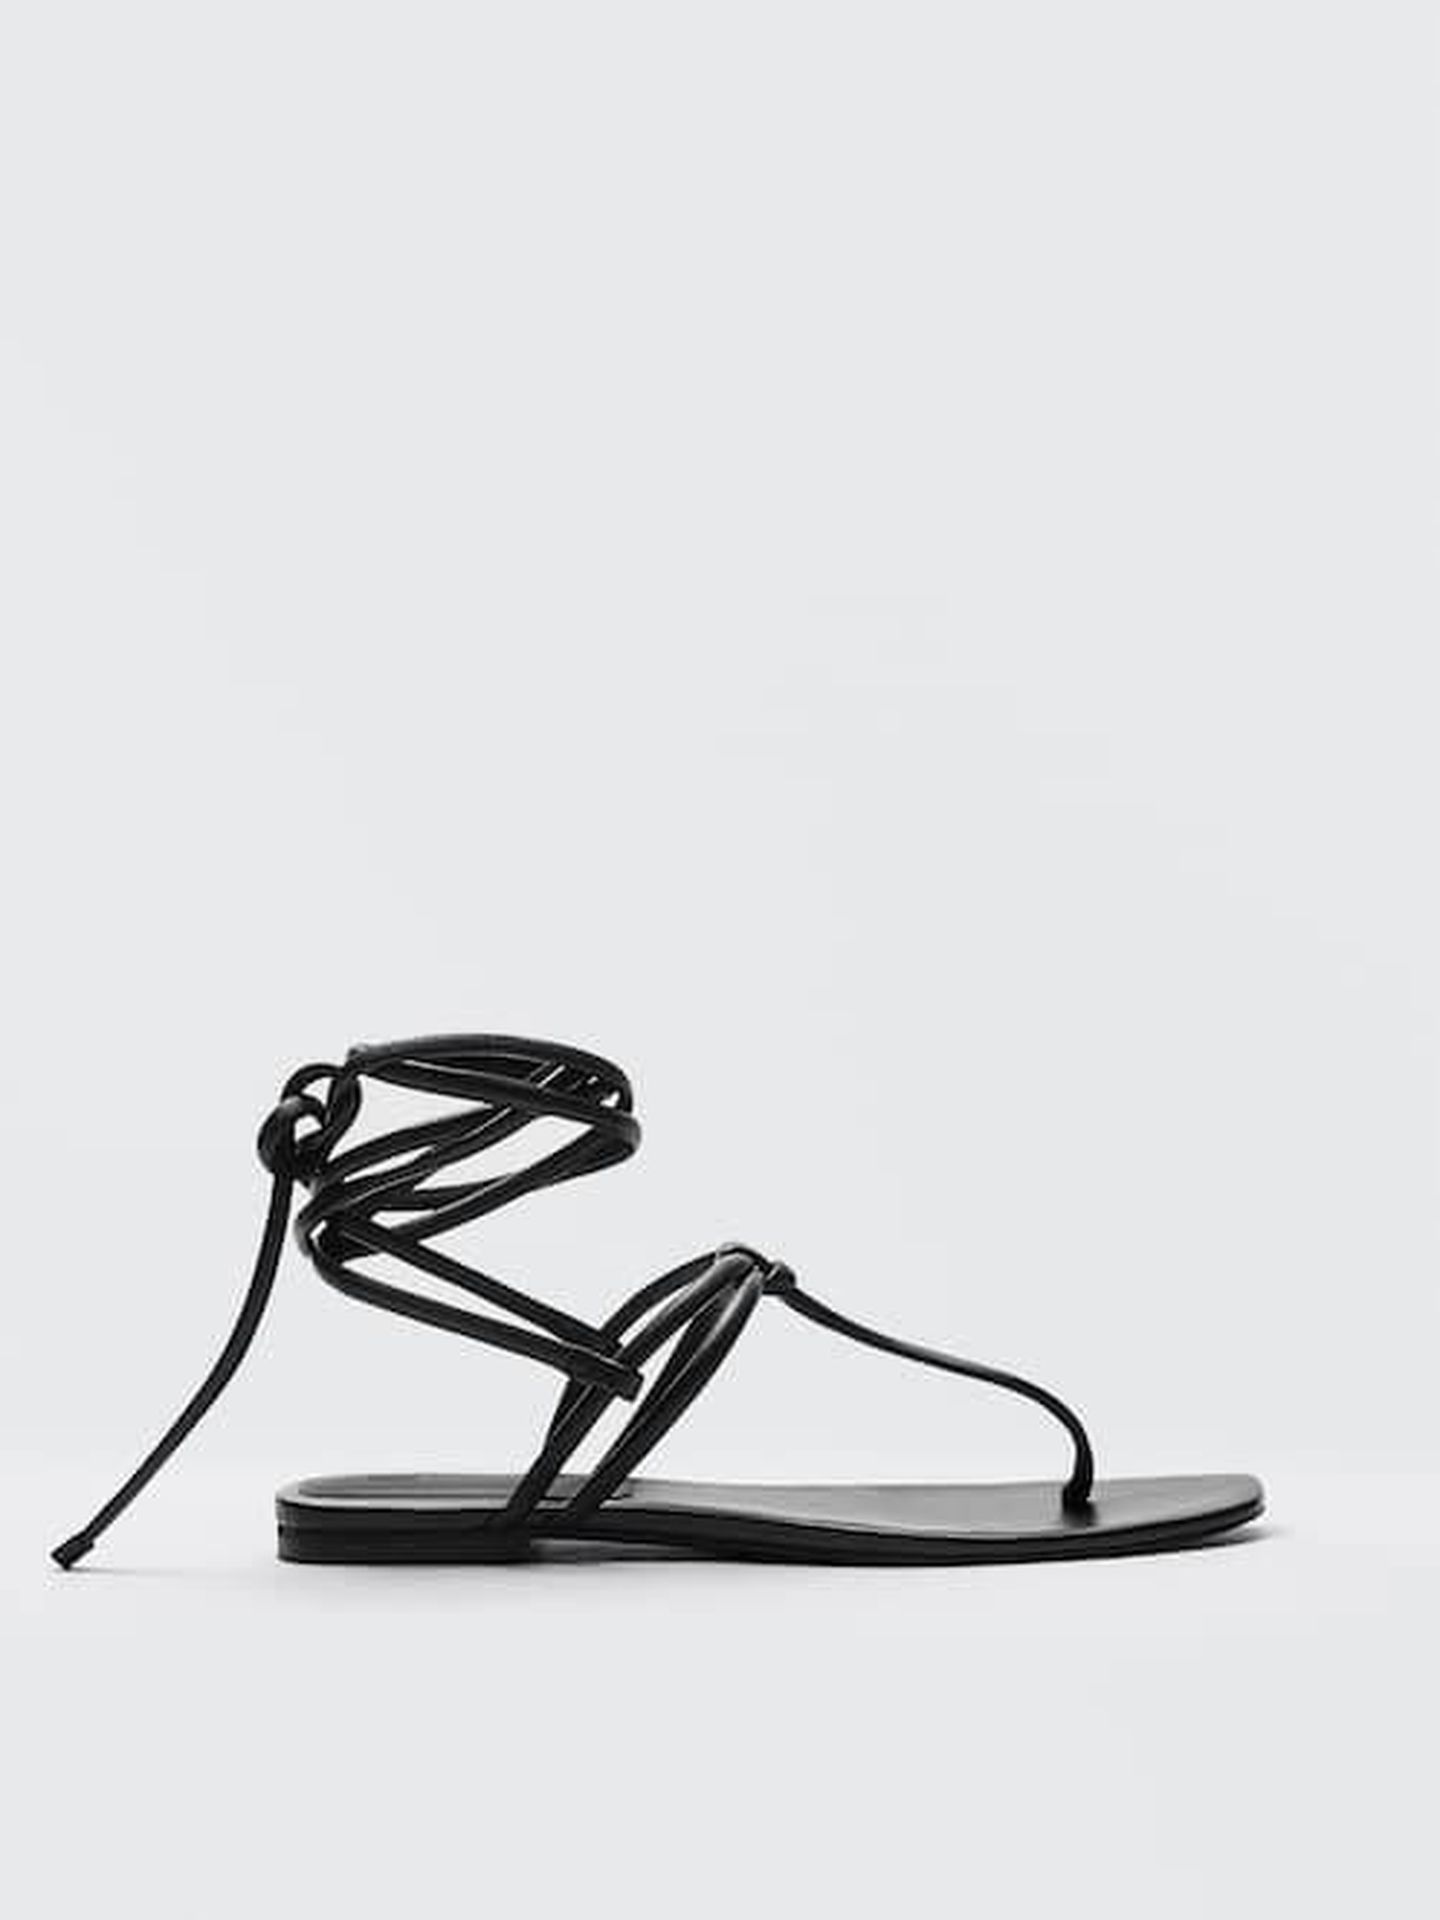 Massimo Dutti las sandalias planas, negras y de tendencia de tus sueños